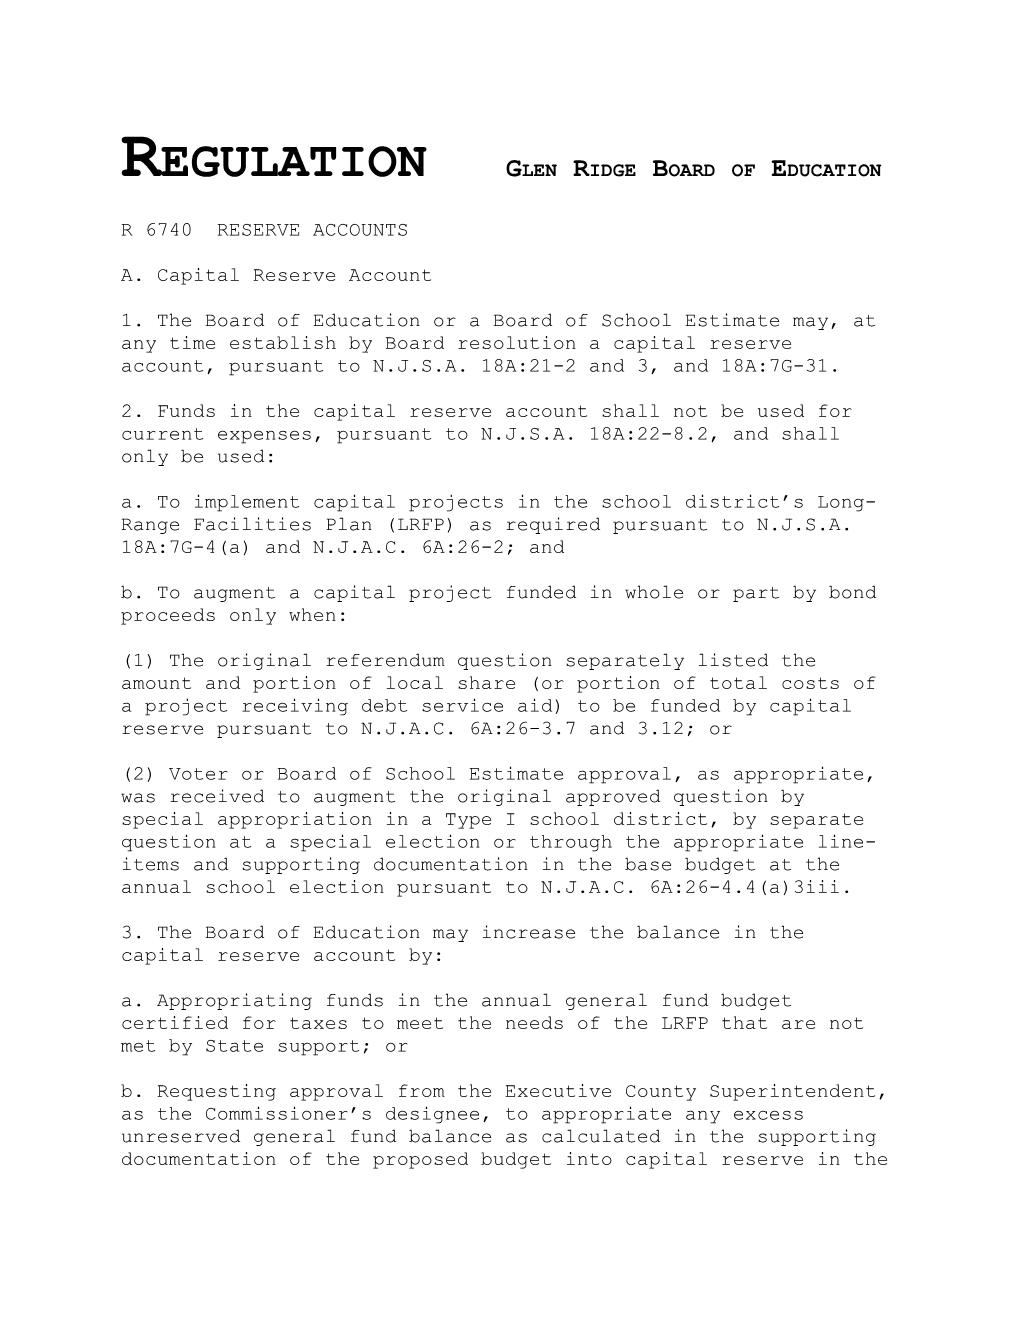 Regulation #R6740 - Reserve Accounts